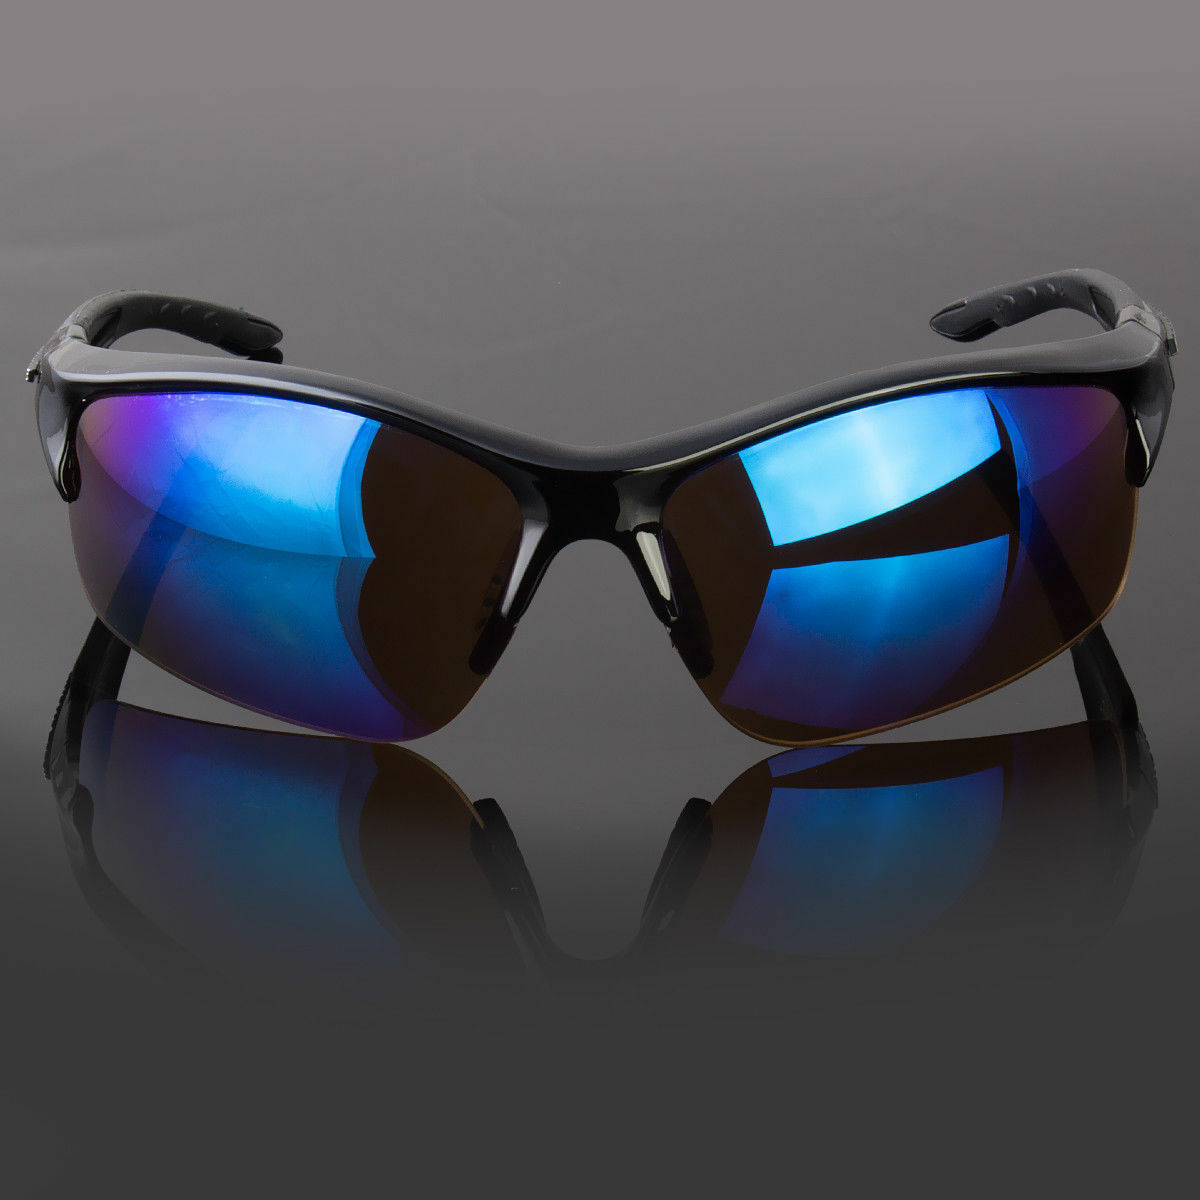 Sport Wrap Hd Driving Vision Sunglasses Blue Lens High Definition Glasses Sunglasses